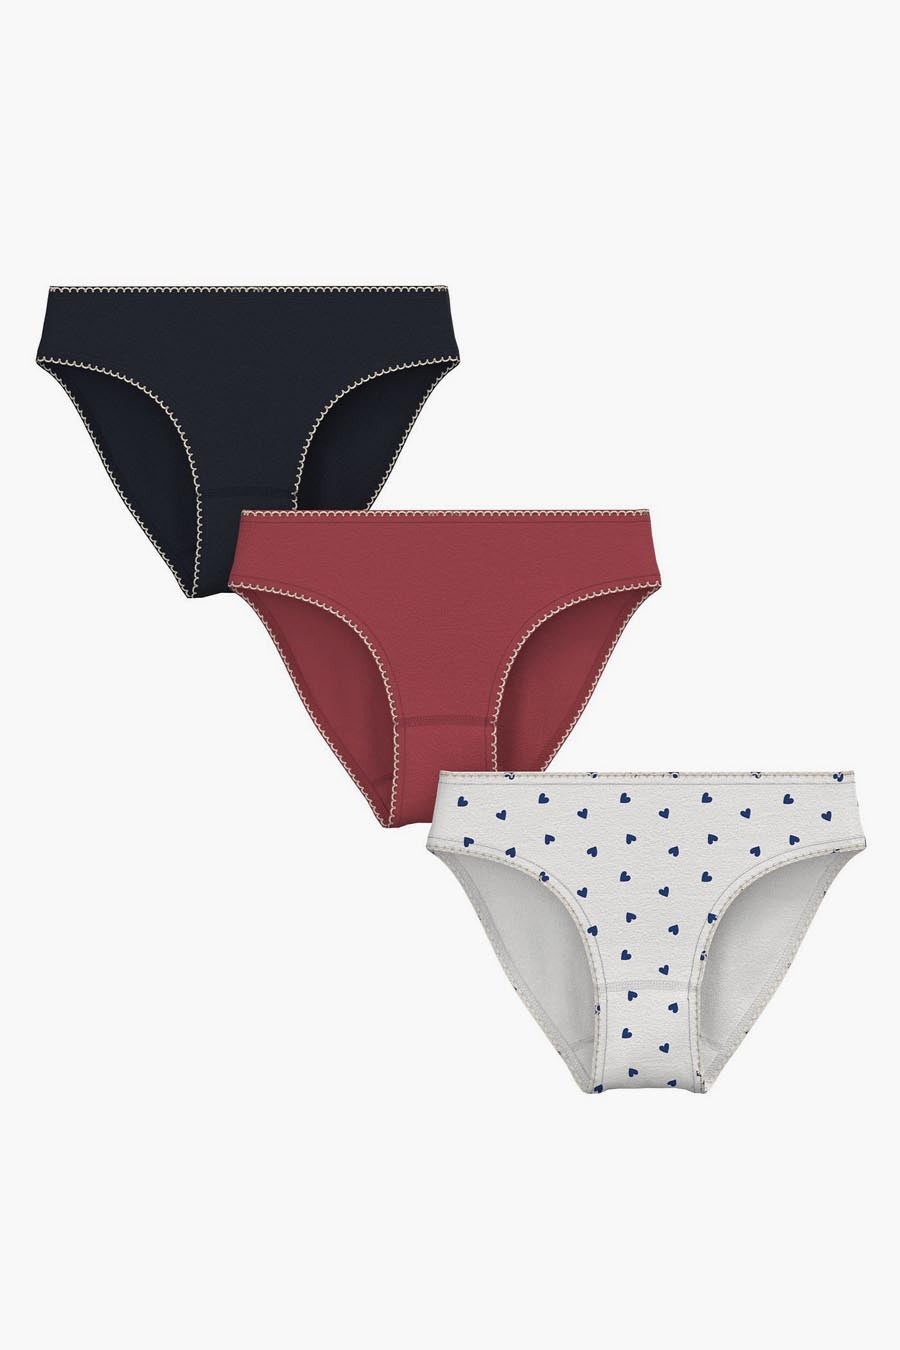 Petit Bateau Girls Cami Undershirts – Mini Ruby